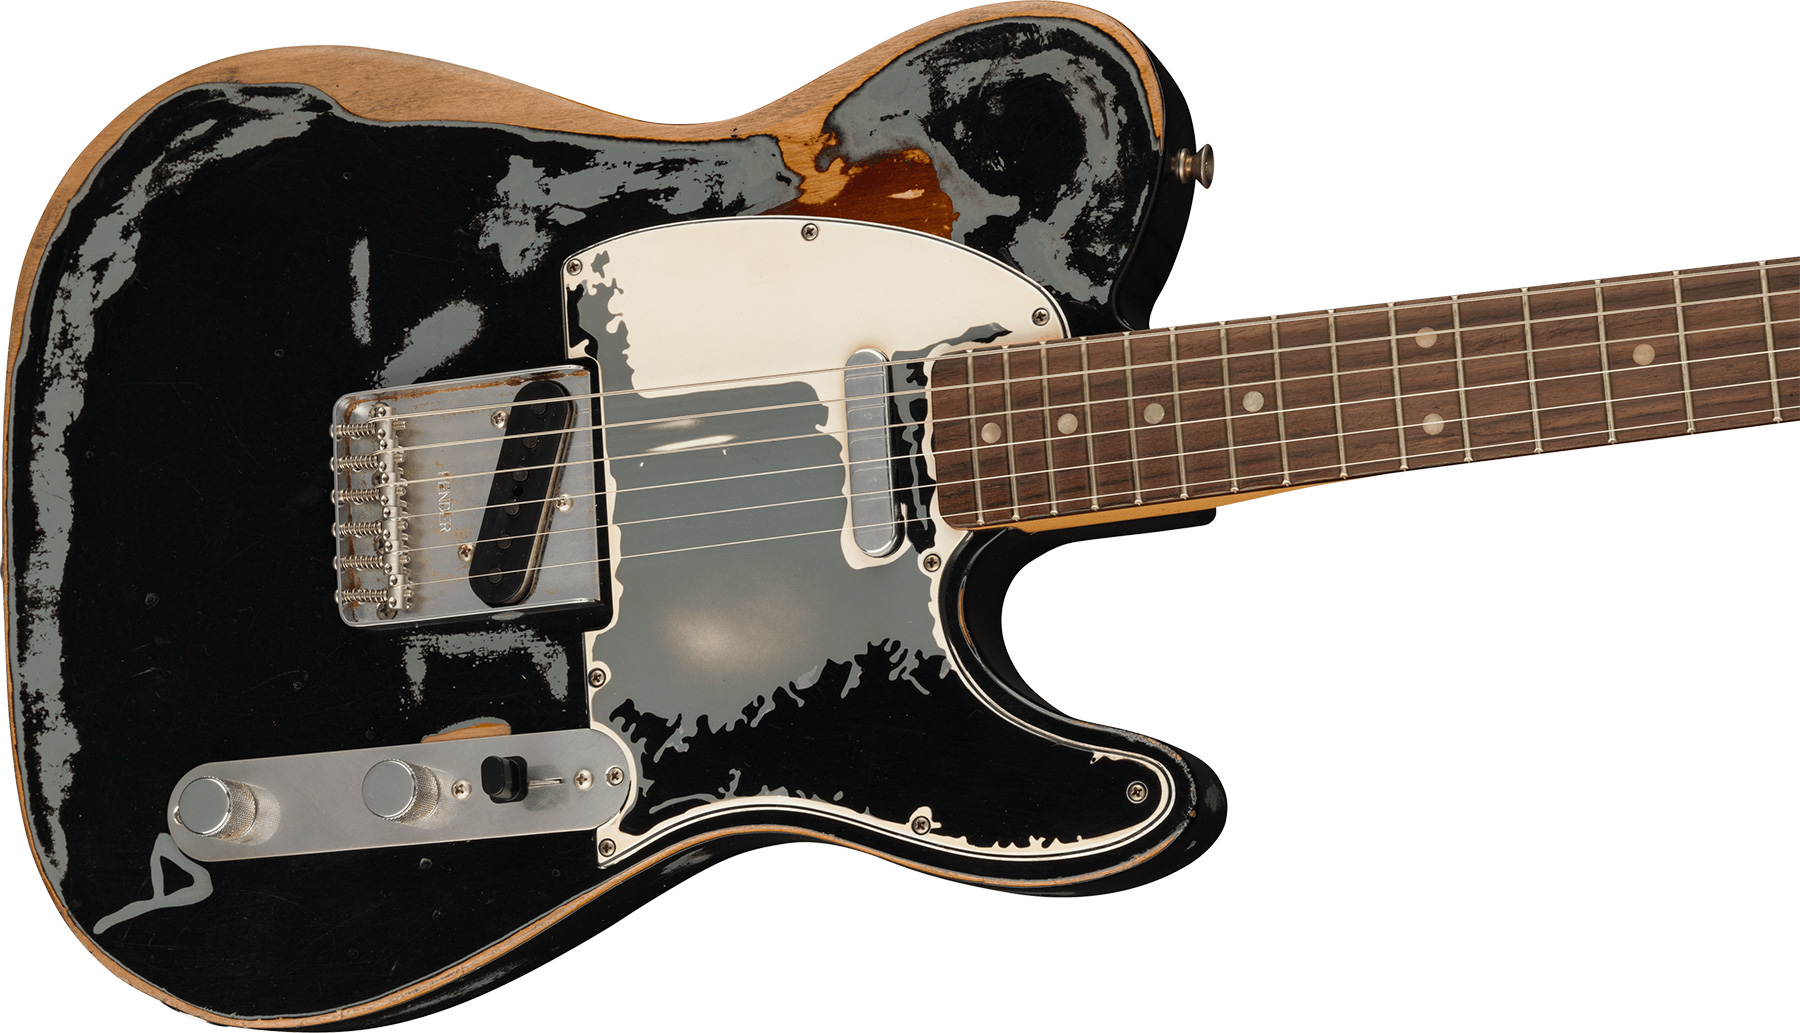 Fender Joe Strummer Tele Mex Signature 2s Ht Rw - Road Worn Black Over 3-color Sunburst - Tel shape electric guitar - Variation 2